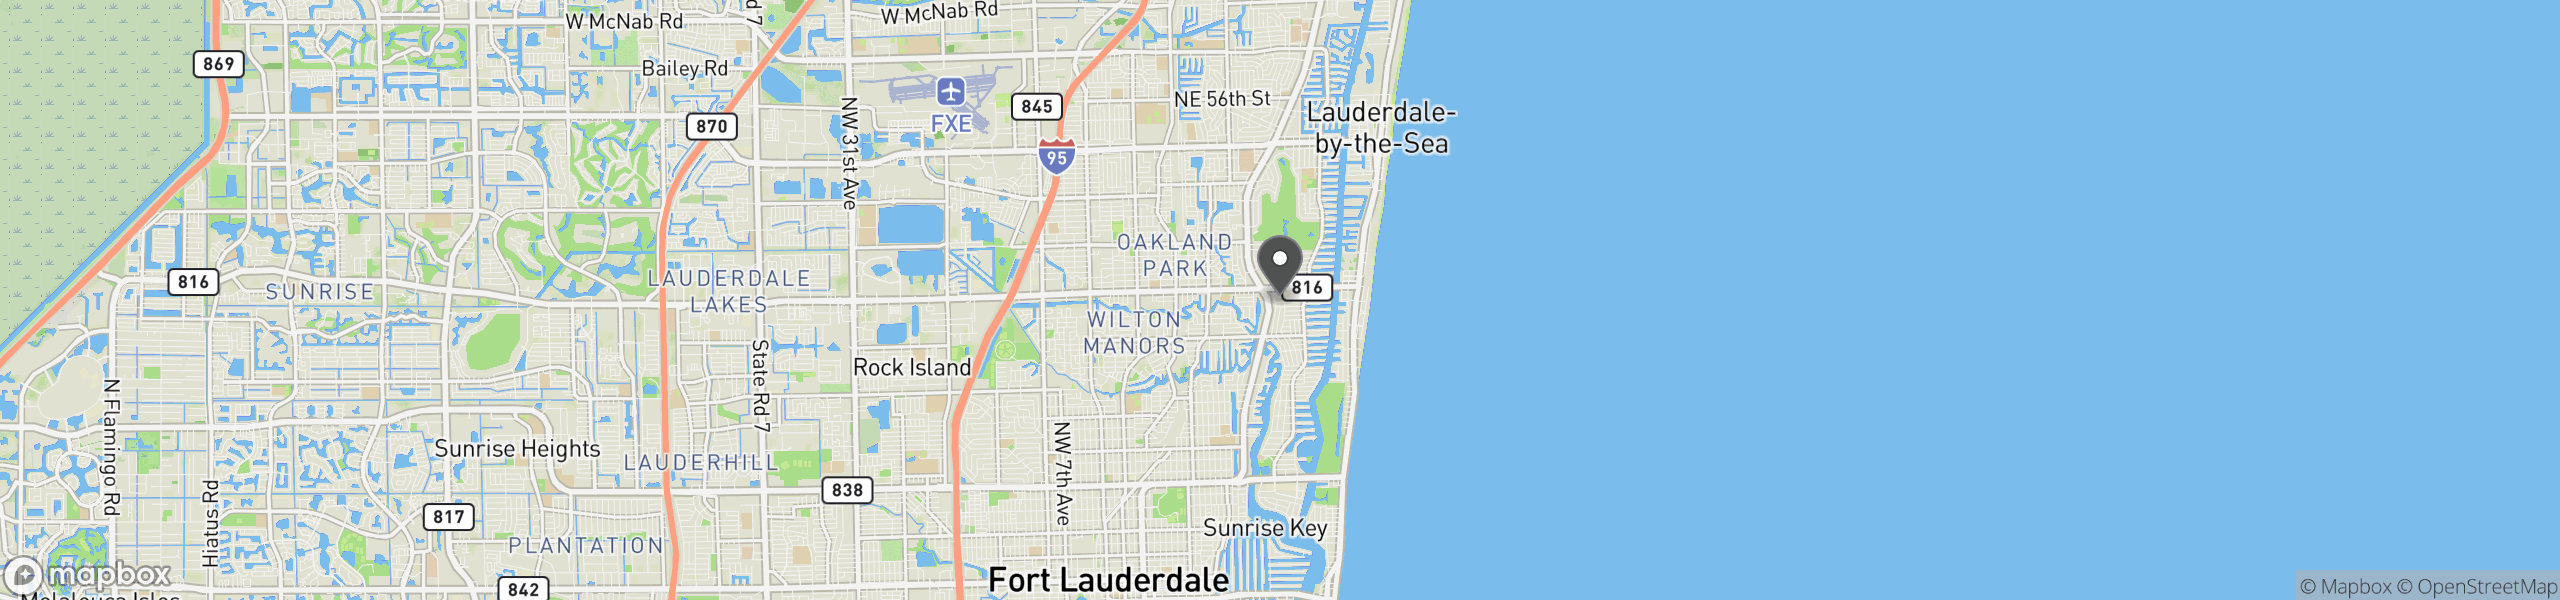 Fort Lauderdale, FL 33306